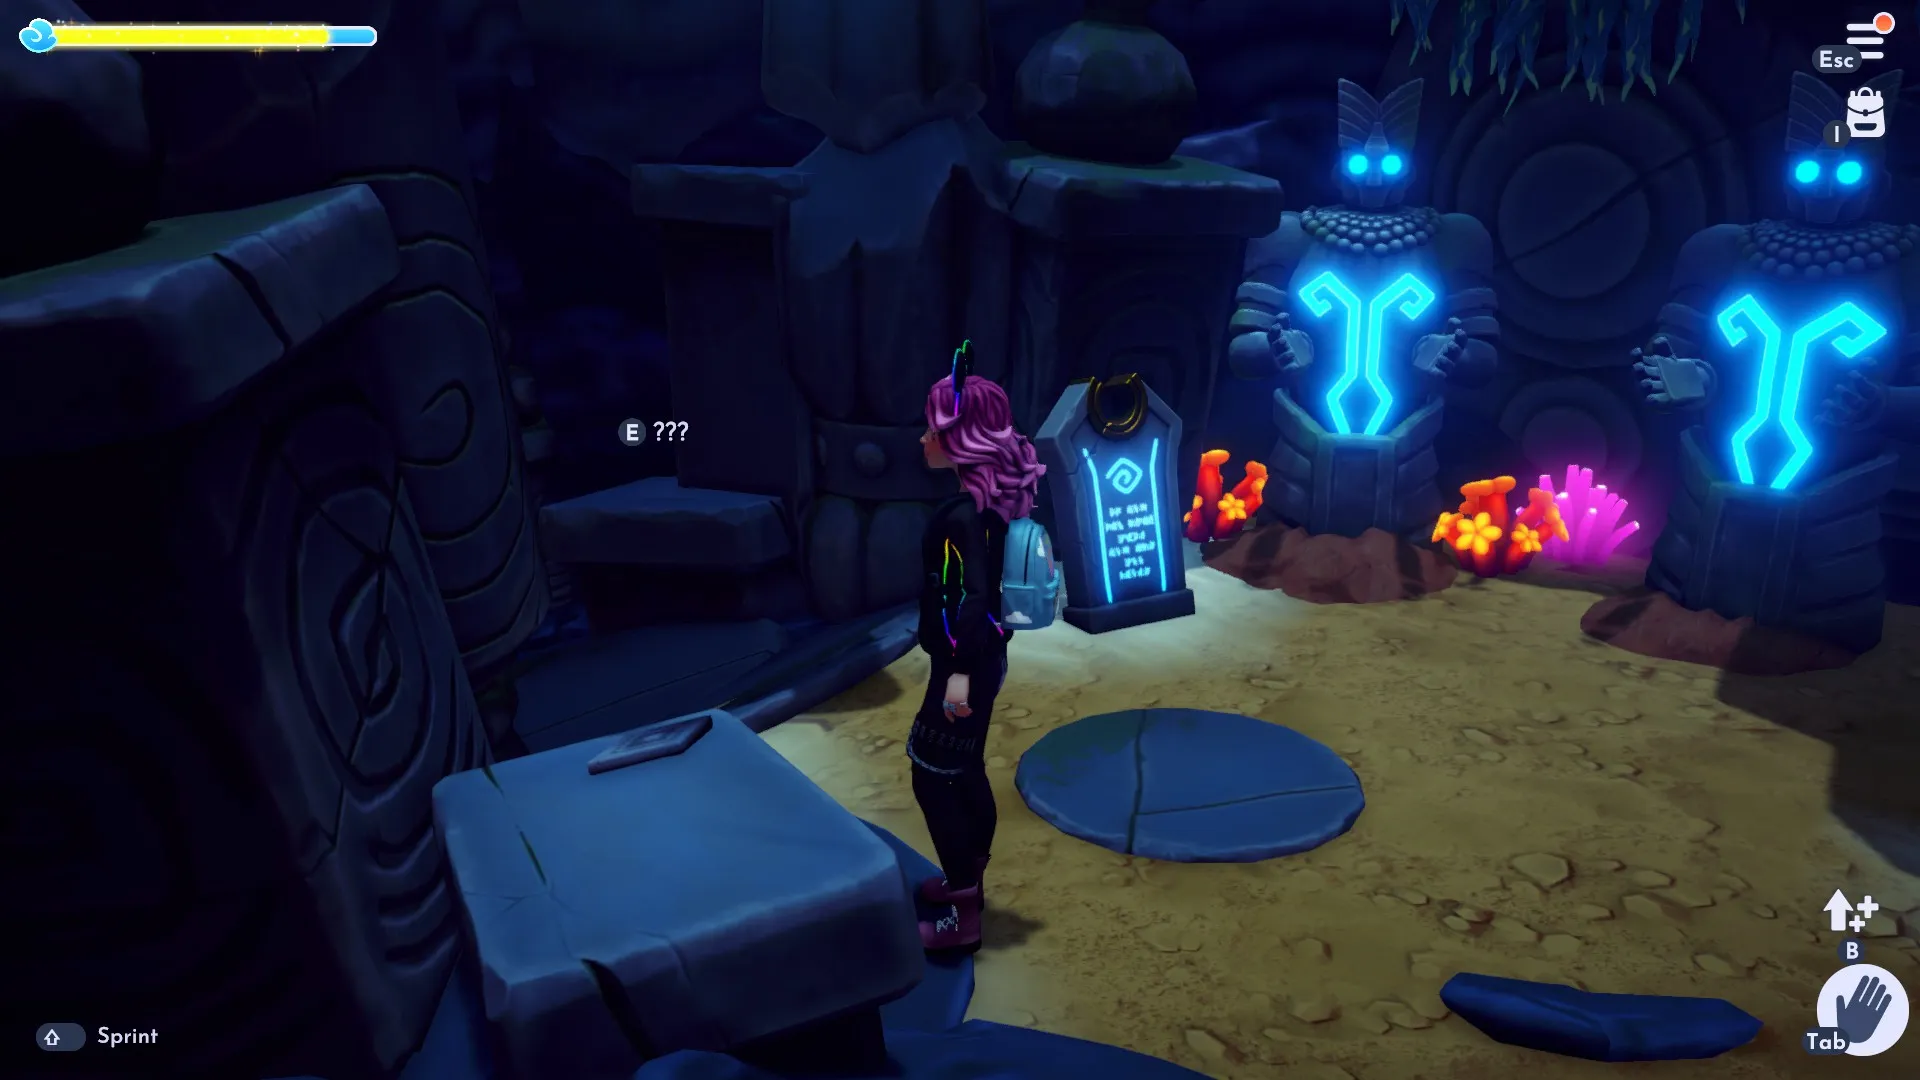 Spilleren ser på et diamantsymbol i den mystiske hule